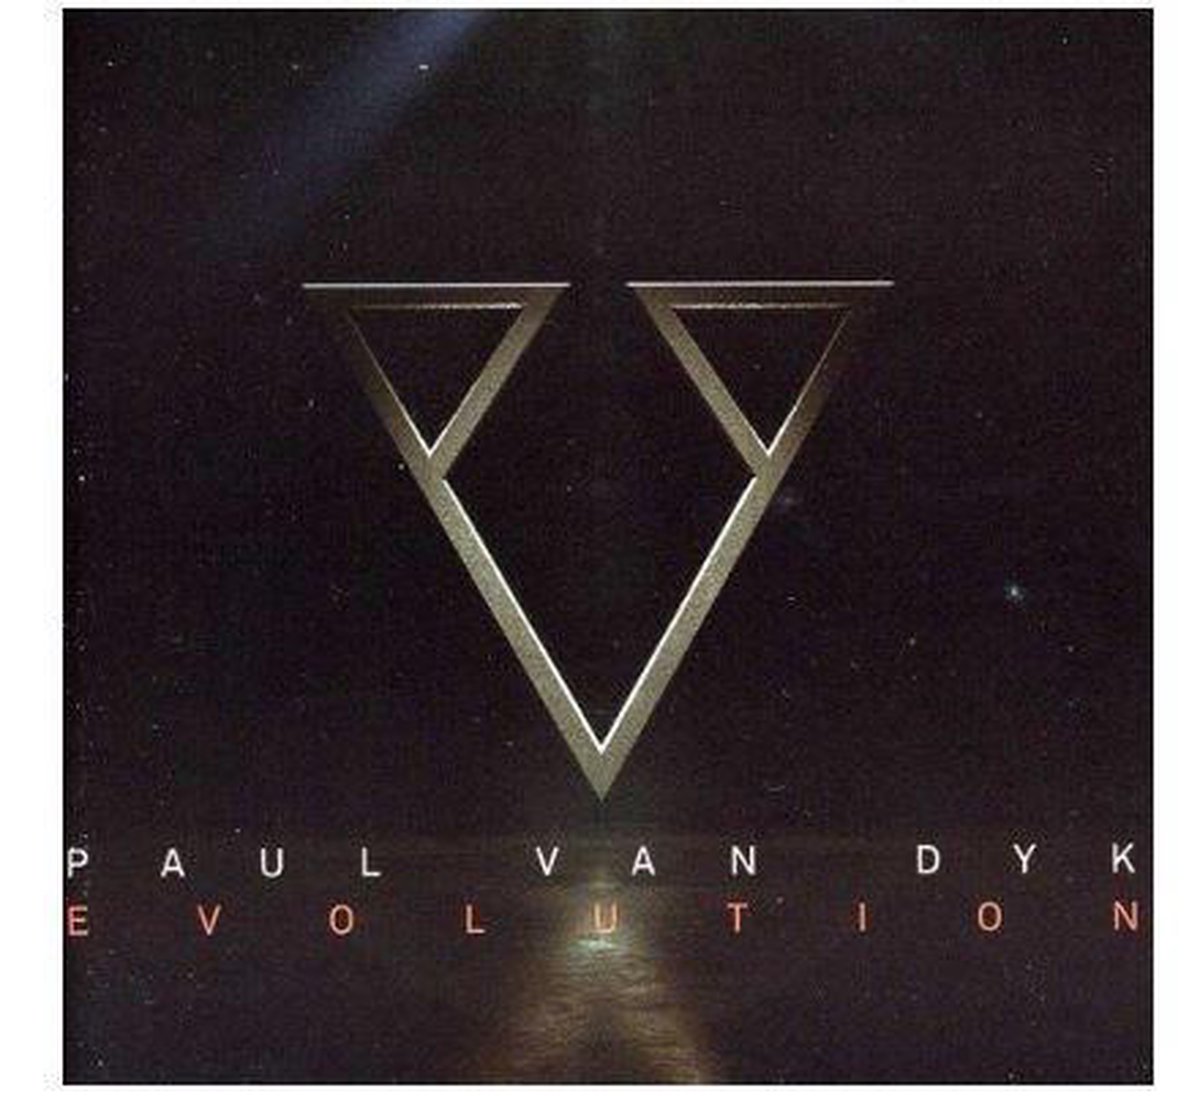 Evolution - Paul van Dyk